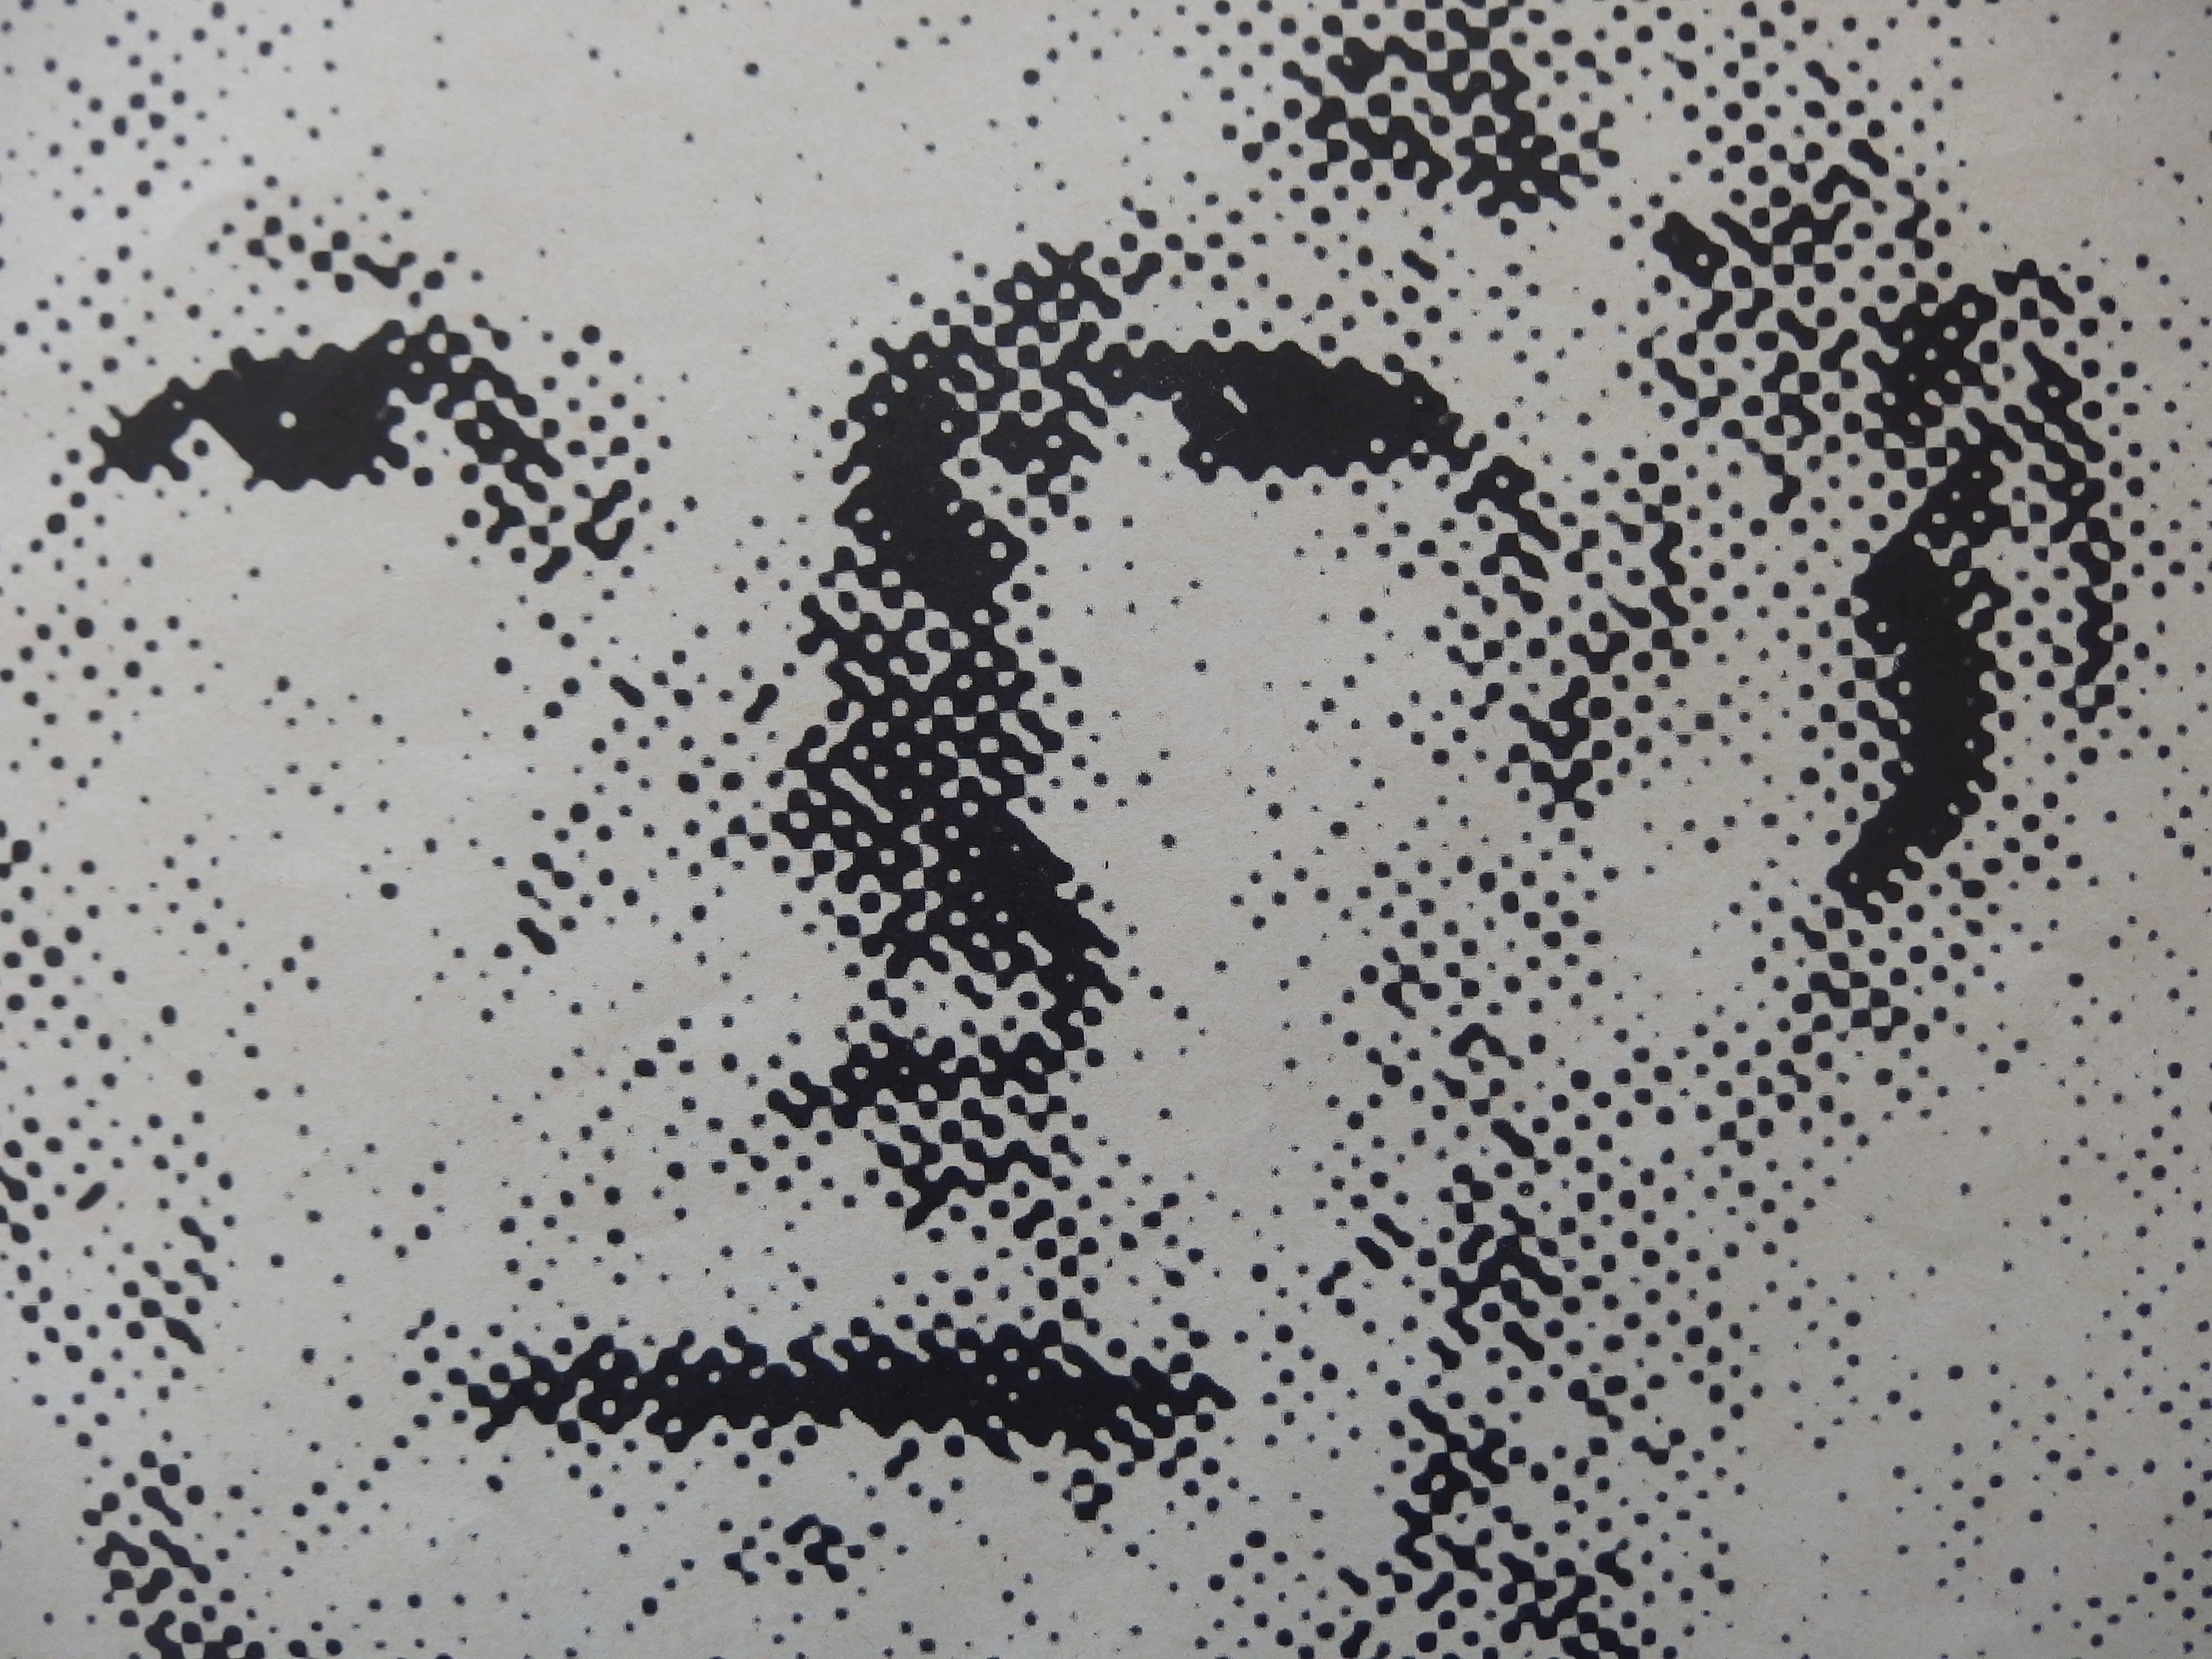 Andy WARHOL
The thirteen most wanted (n°6 Redmond)

Orginal  screen print in black on paper
54 x 74 cm (c. 22 x 30